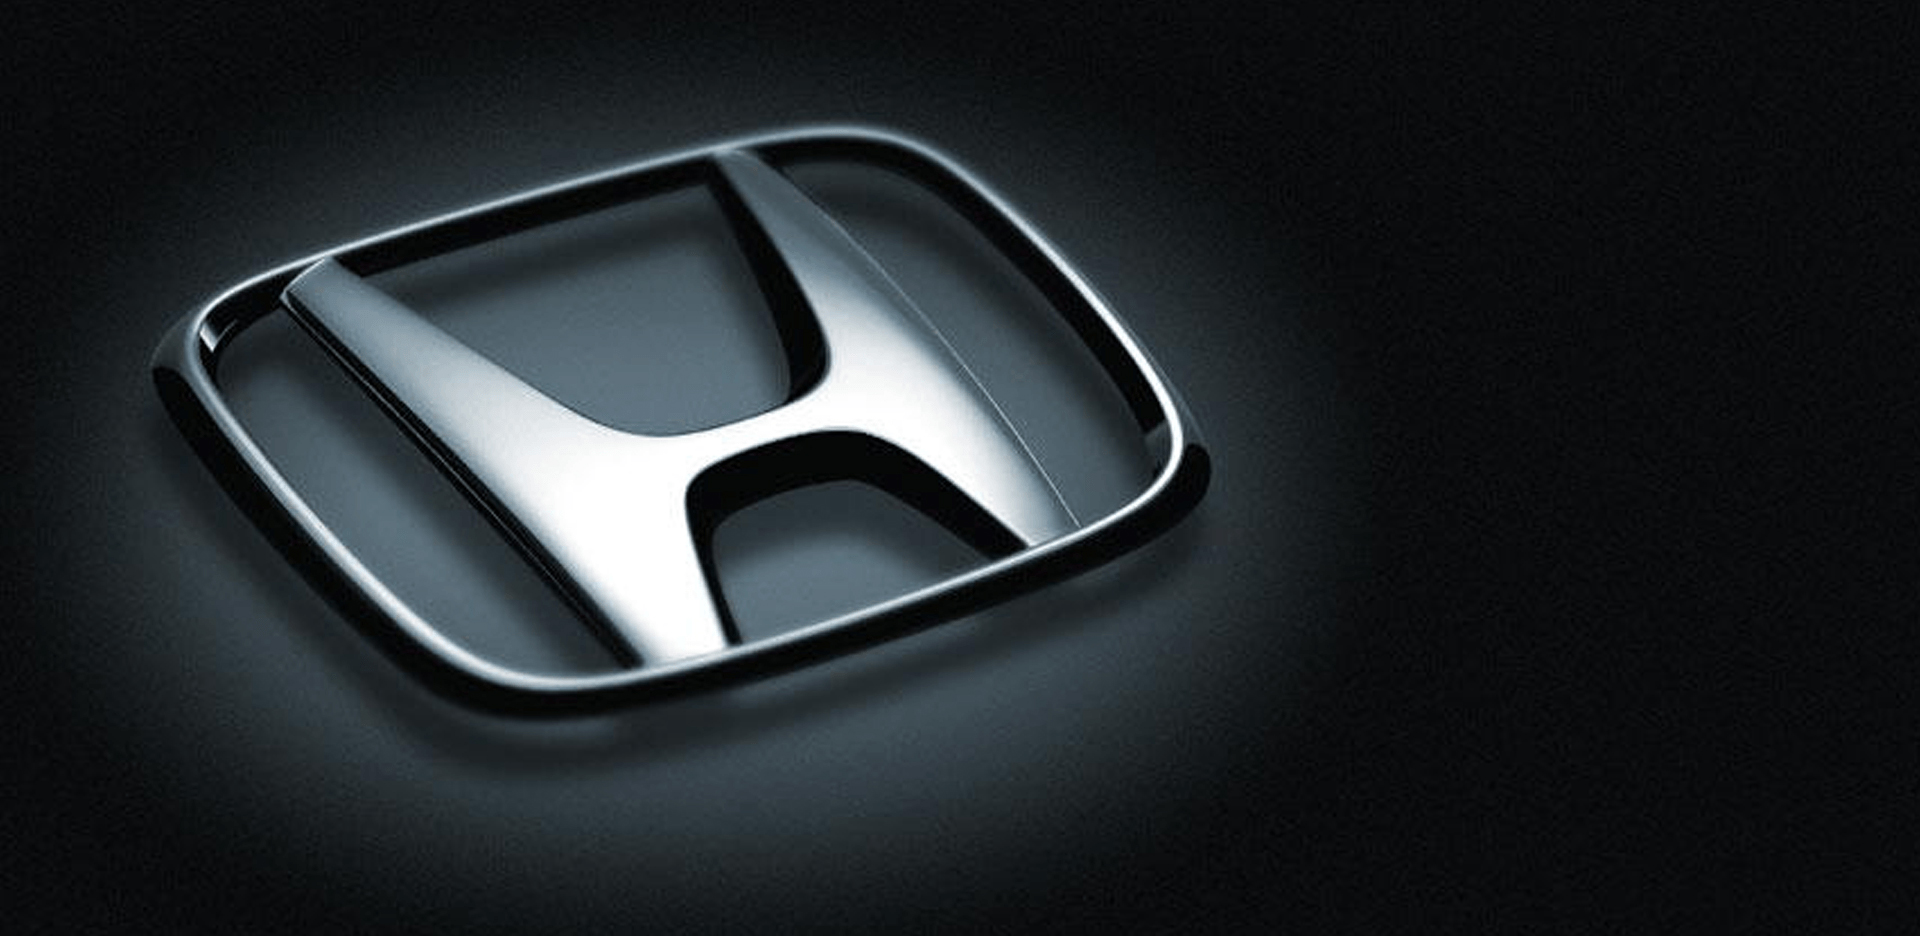 Honda 2021 mali yl net kar beklentisini yukar ynl revize etti